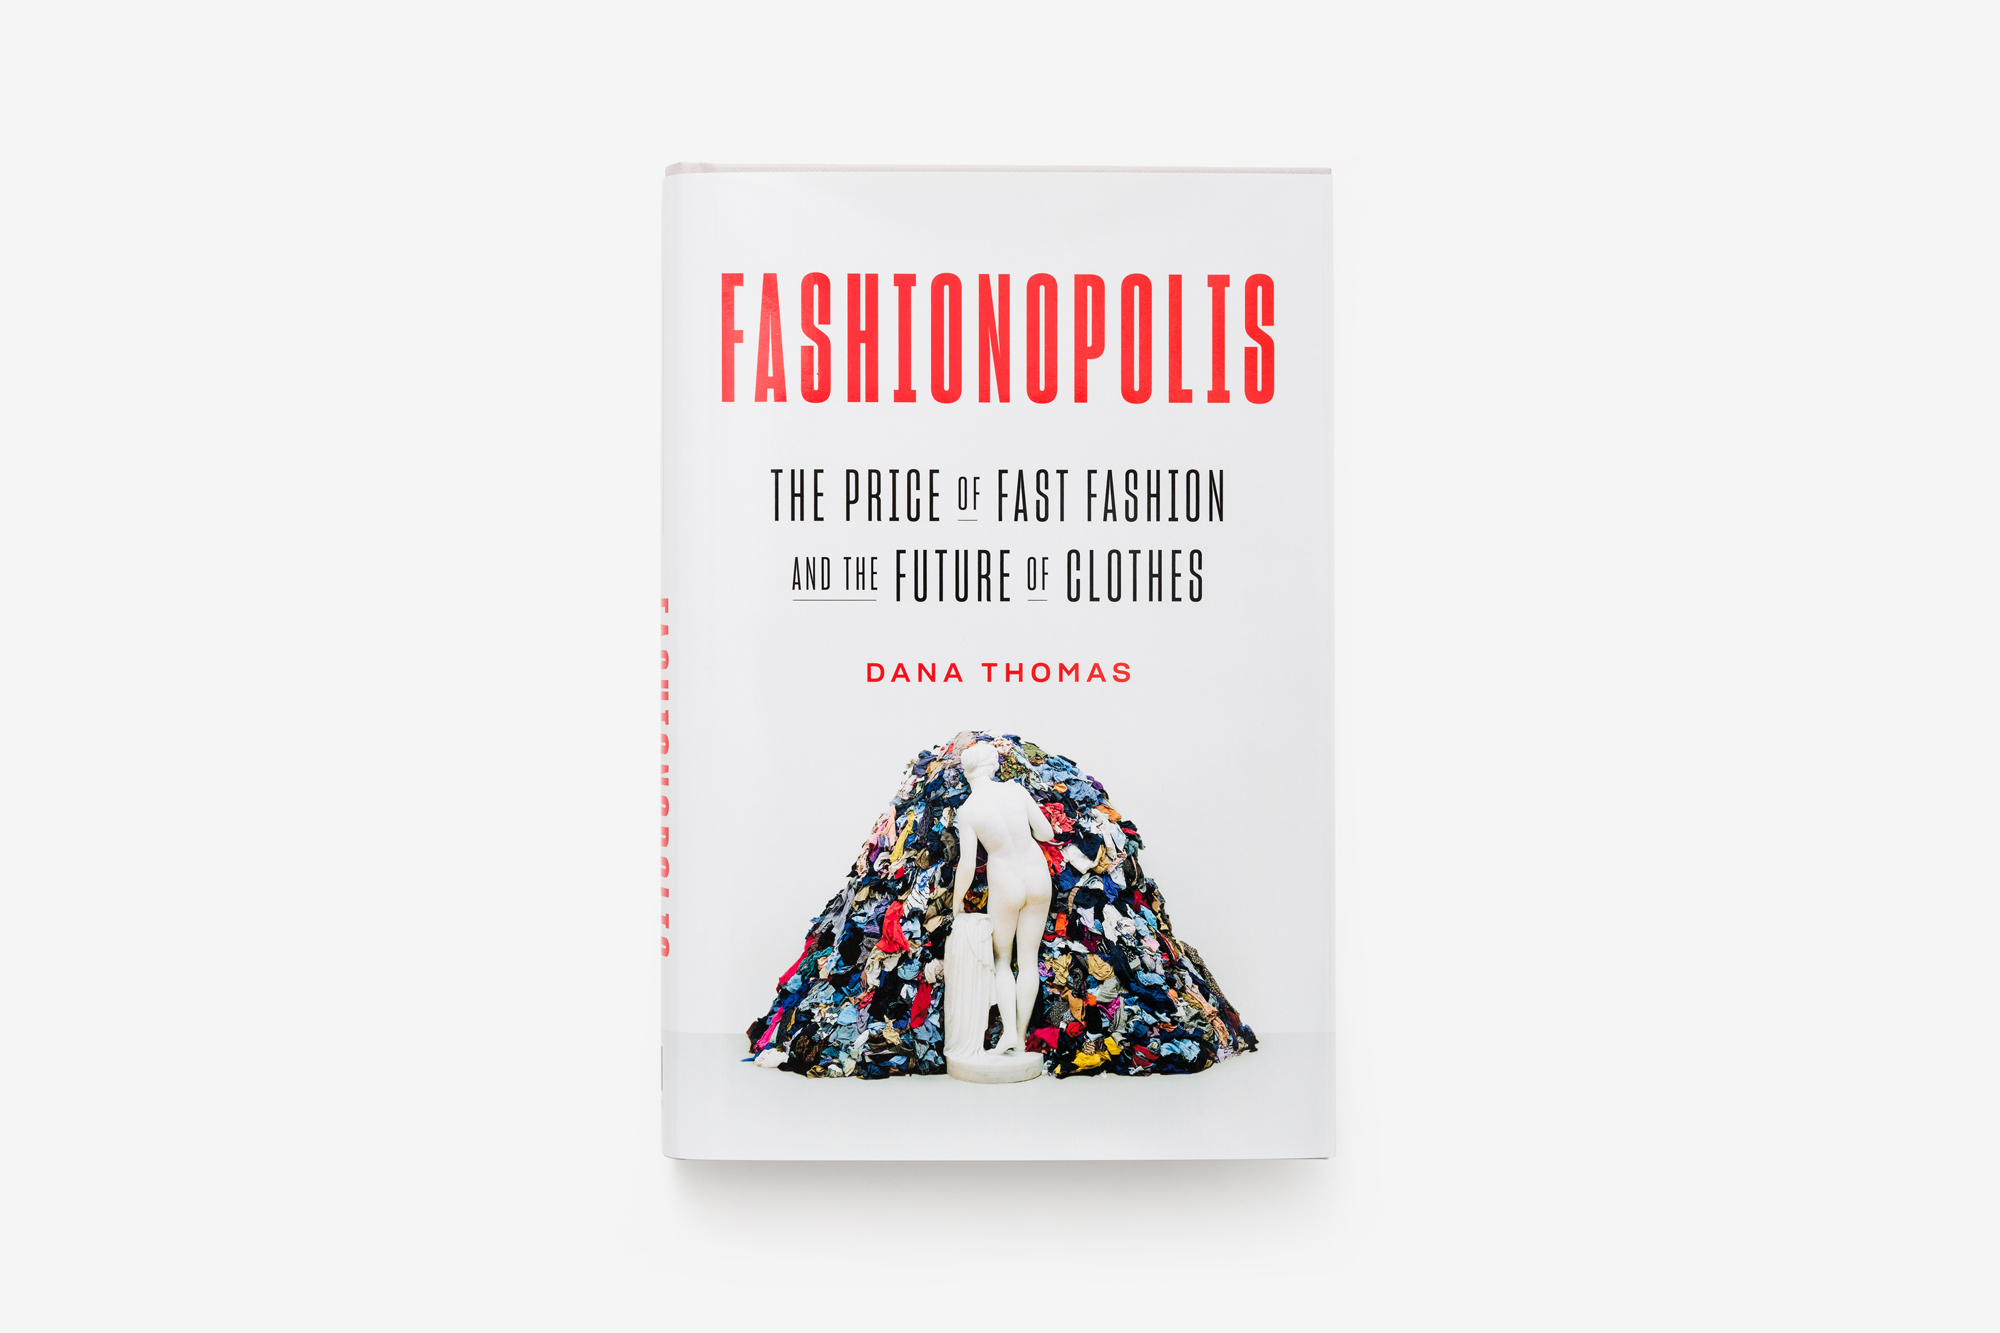 The cover of Fashionopolis, a book by Dana Thomas.